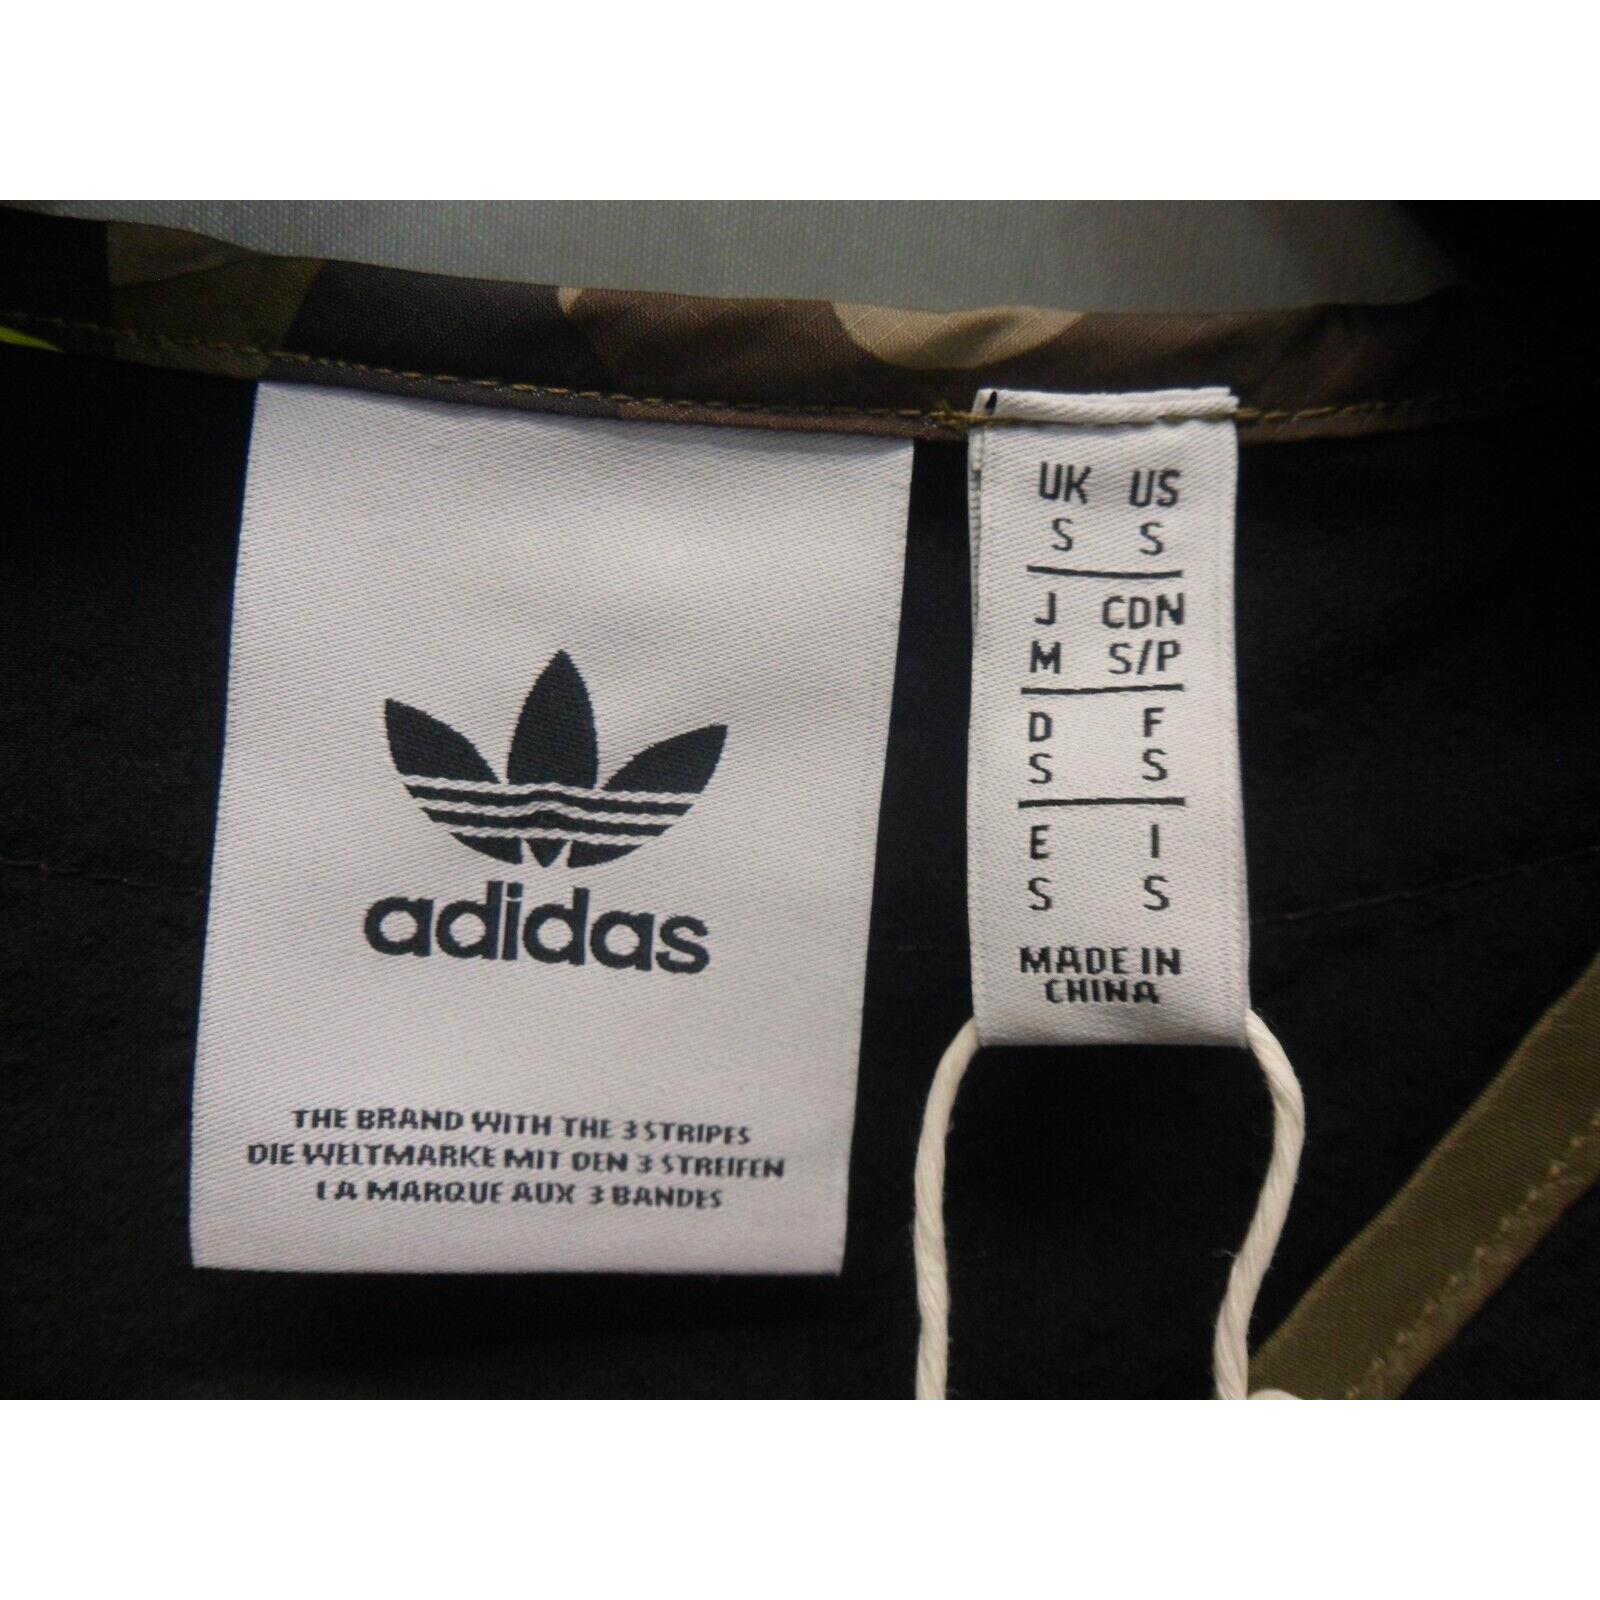 Adidas clothing Camo Shirt - Black 4